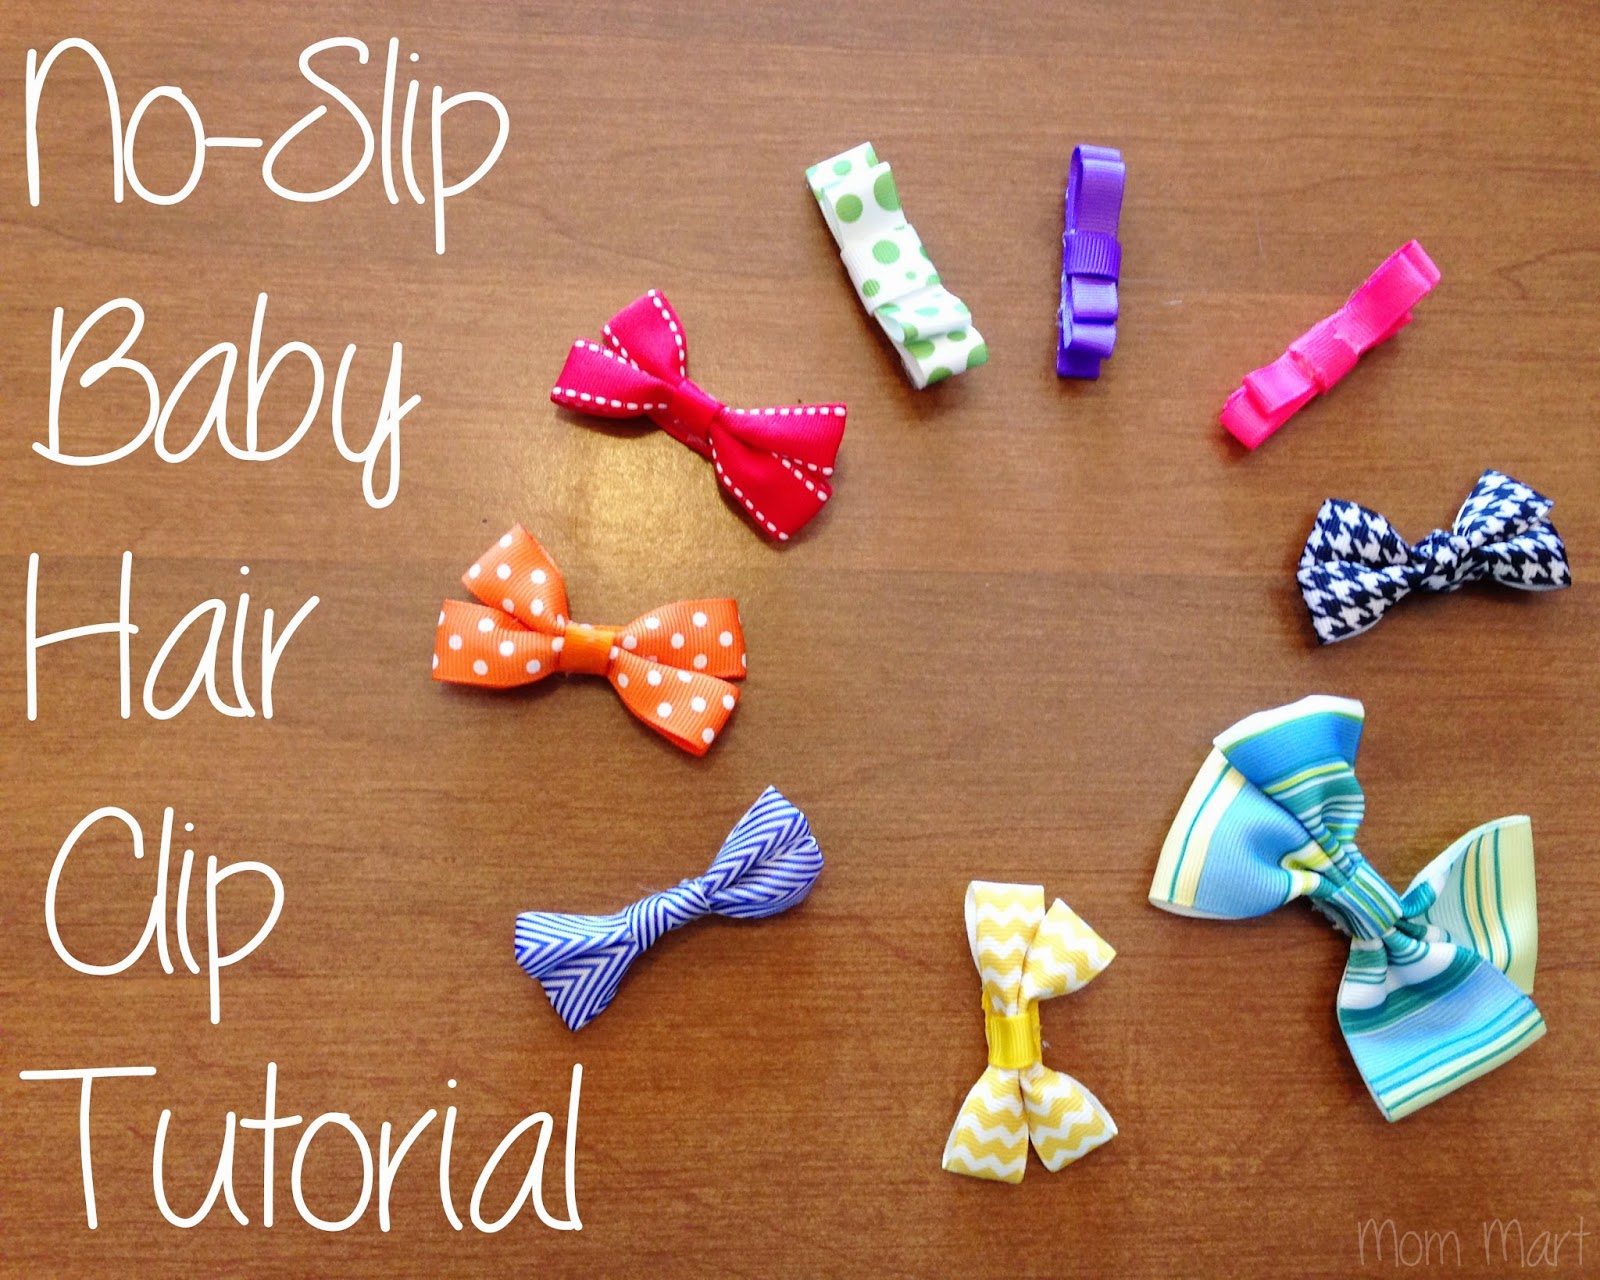 DIY baby hair clips with a no-slip grip, #DIY #Tutorial #Homemade #HairBow